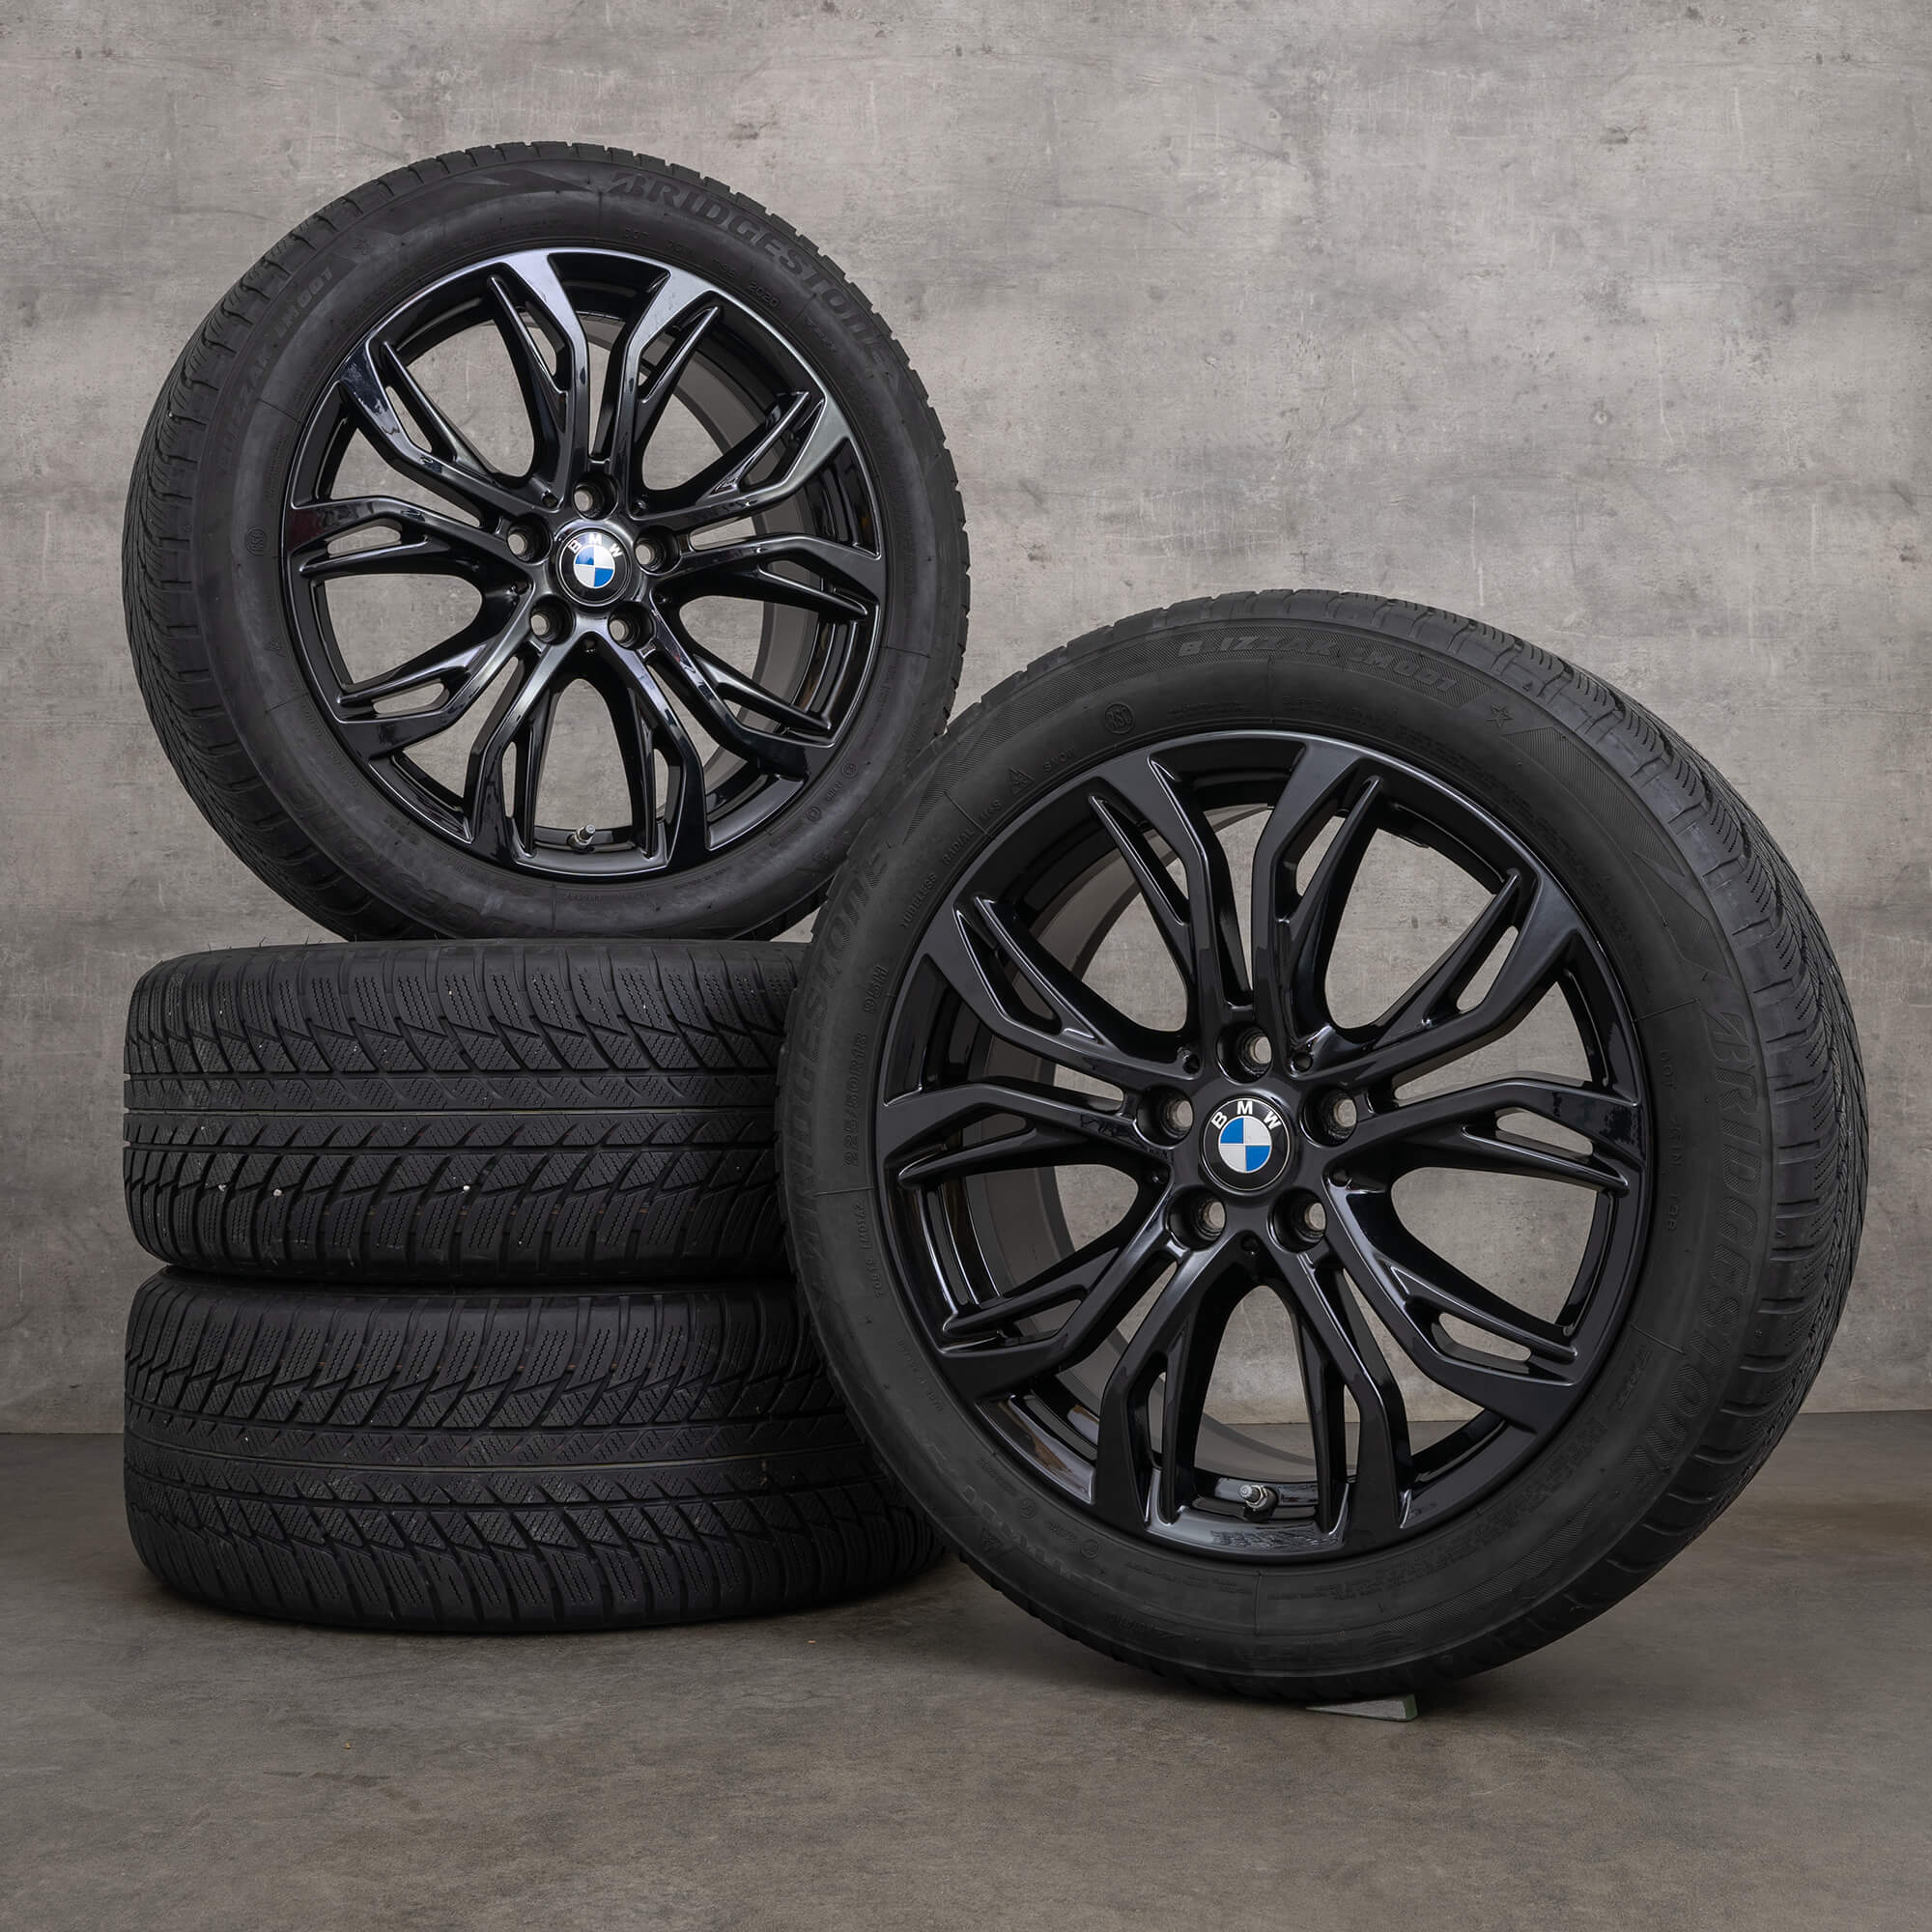 BMW X1 F48 X2 F39 winter wheels 18 inch rims tires 6883503 Styling 566